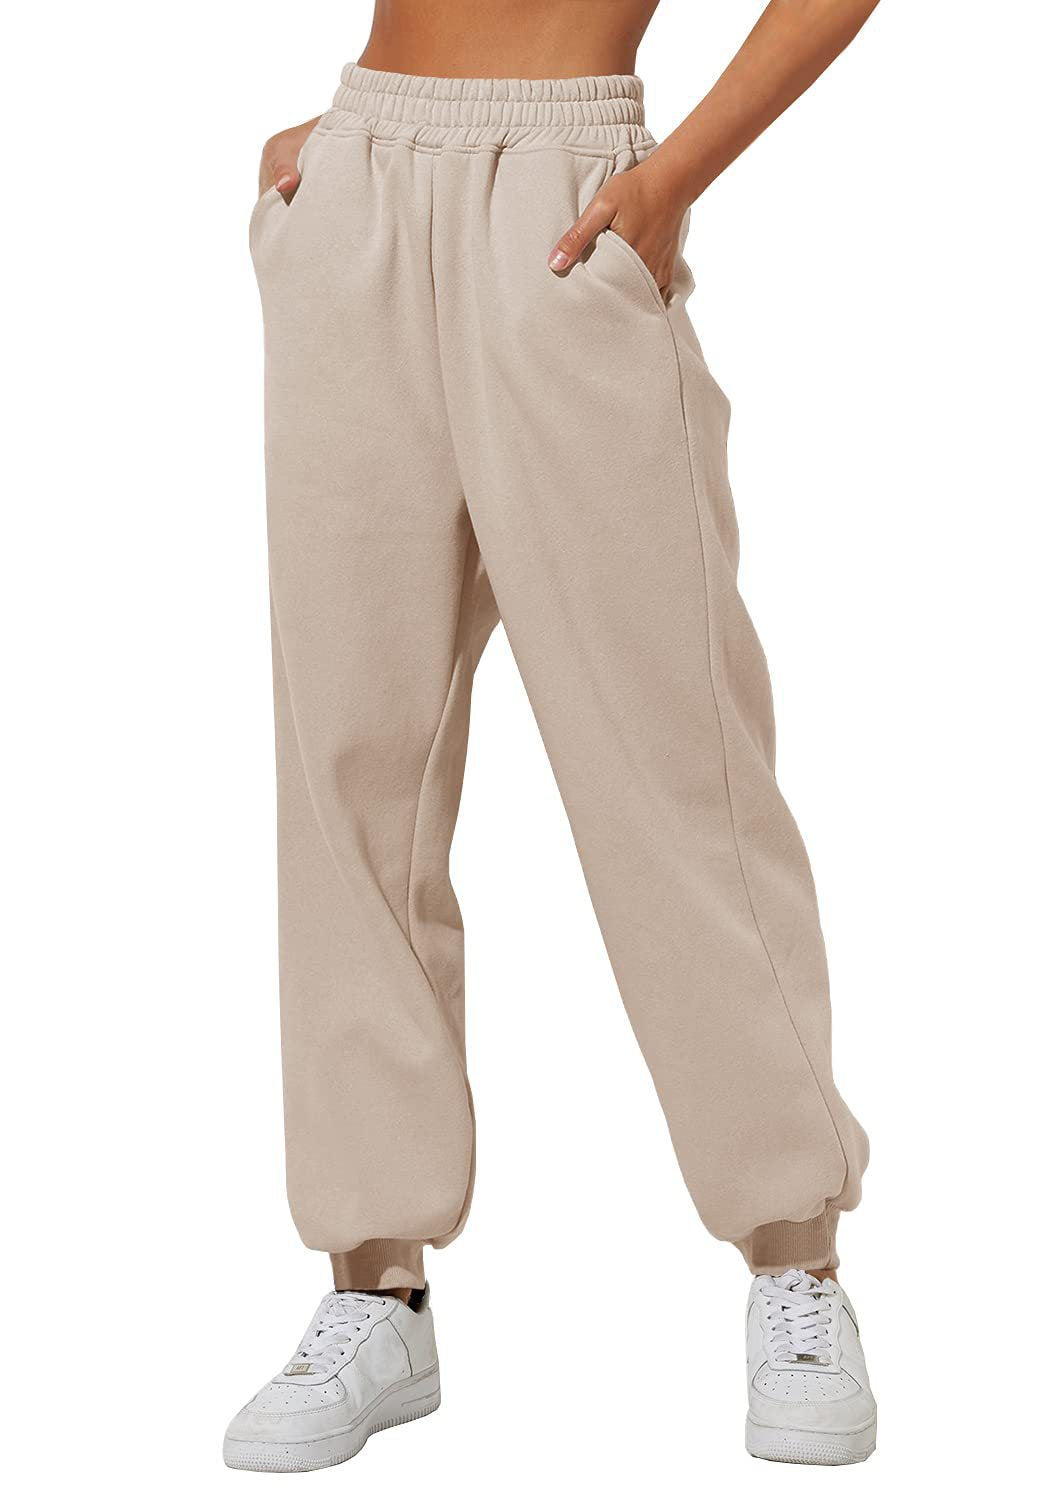 Women's Jogger Sweatpants - High-Waisted Drawstring Lounge Pants with Pockets - Apricot - Pants & Capris - Carvan Mart